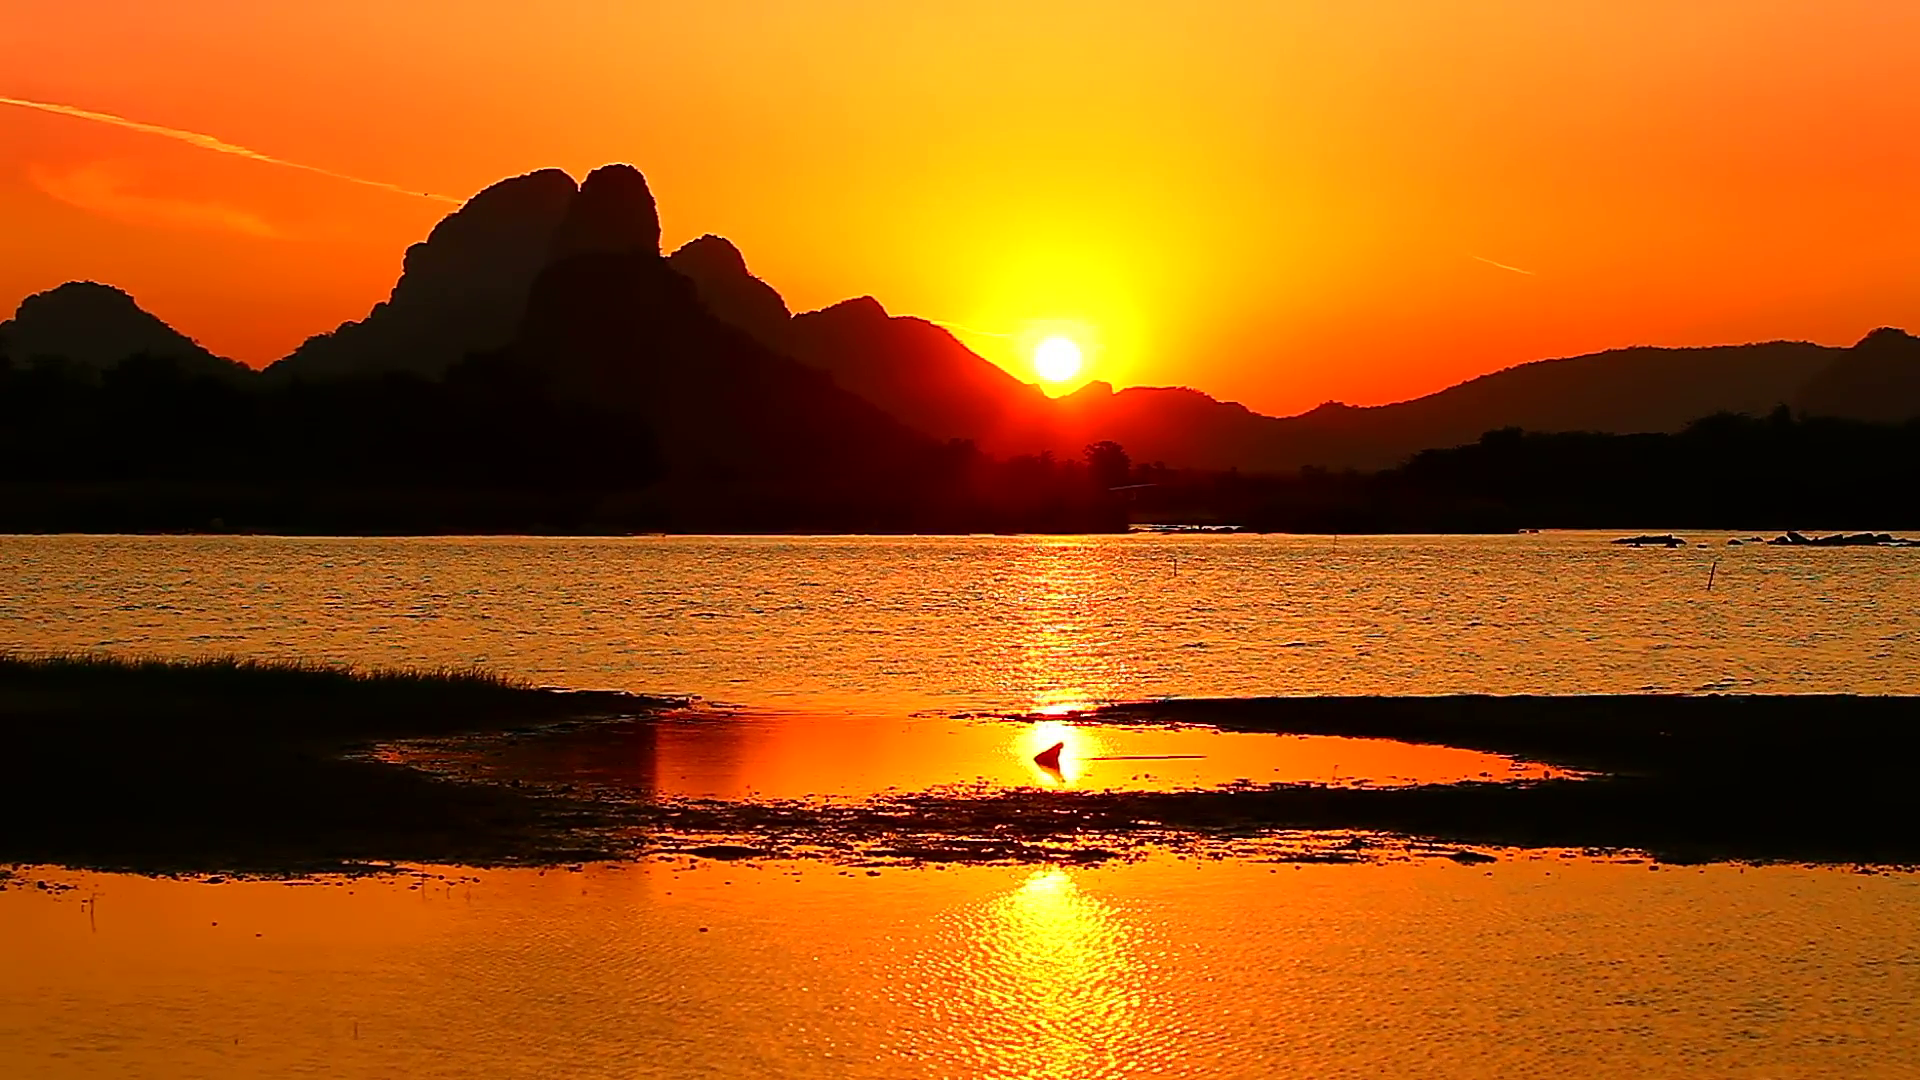 HD: Nice sunset scene on lake, 1920x1080 Stock Video Footage ...